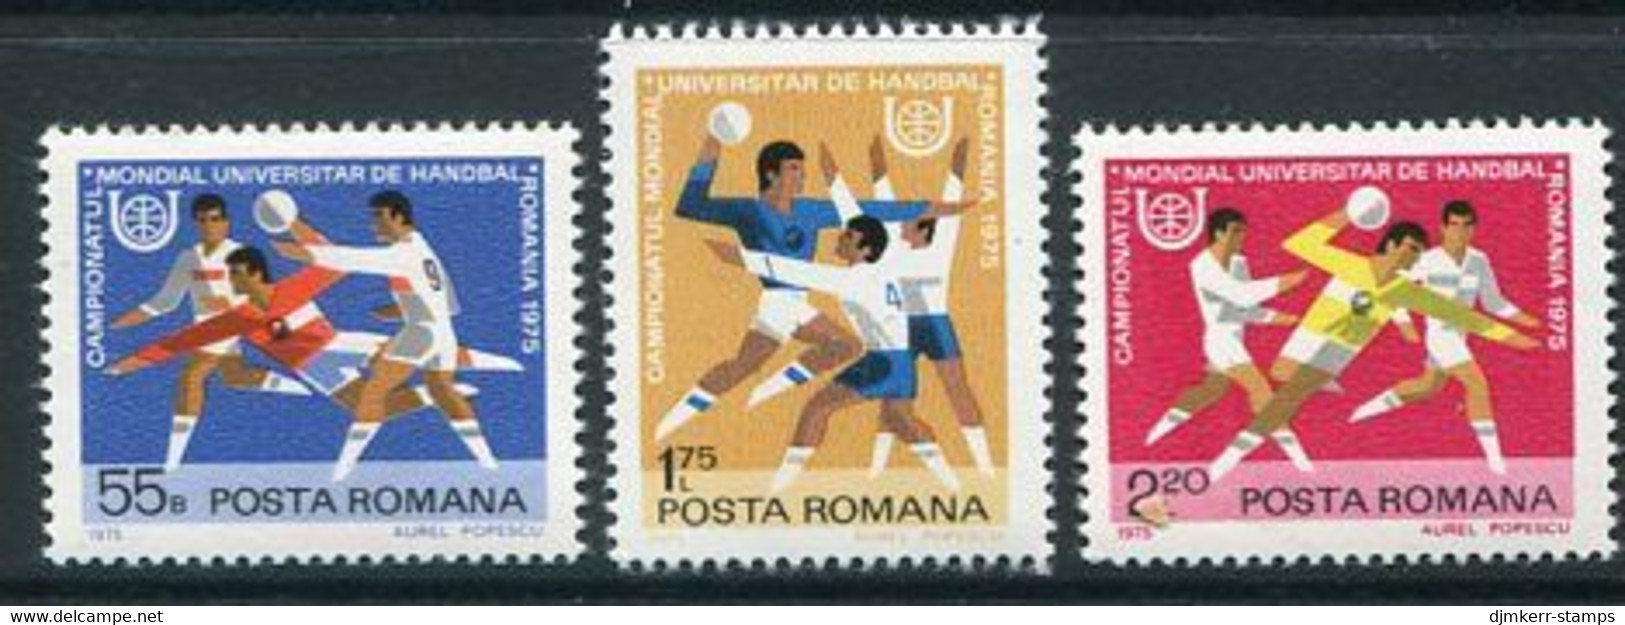 ROMANIA 1975 Student Handball Championship MNH  / **.  Michel 3244-49 - Nuevos